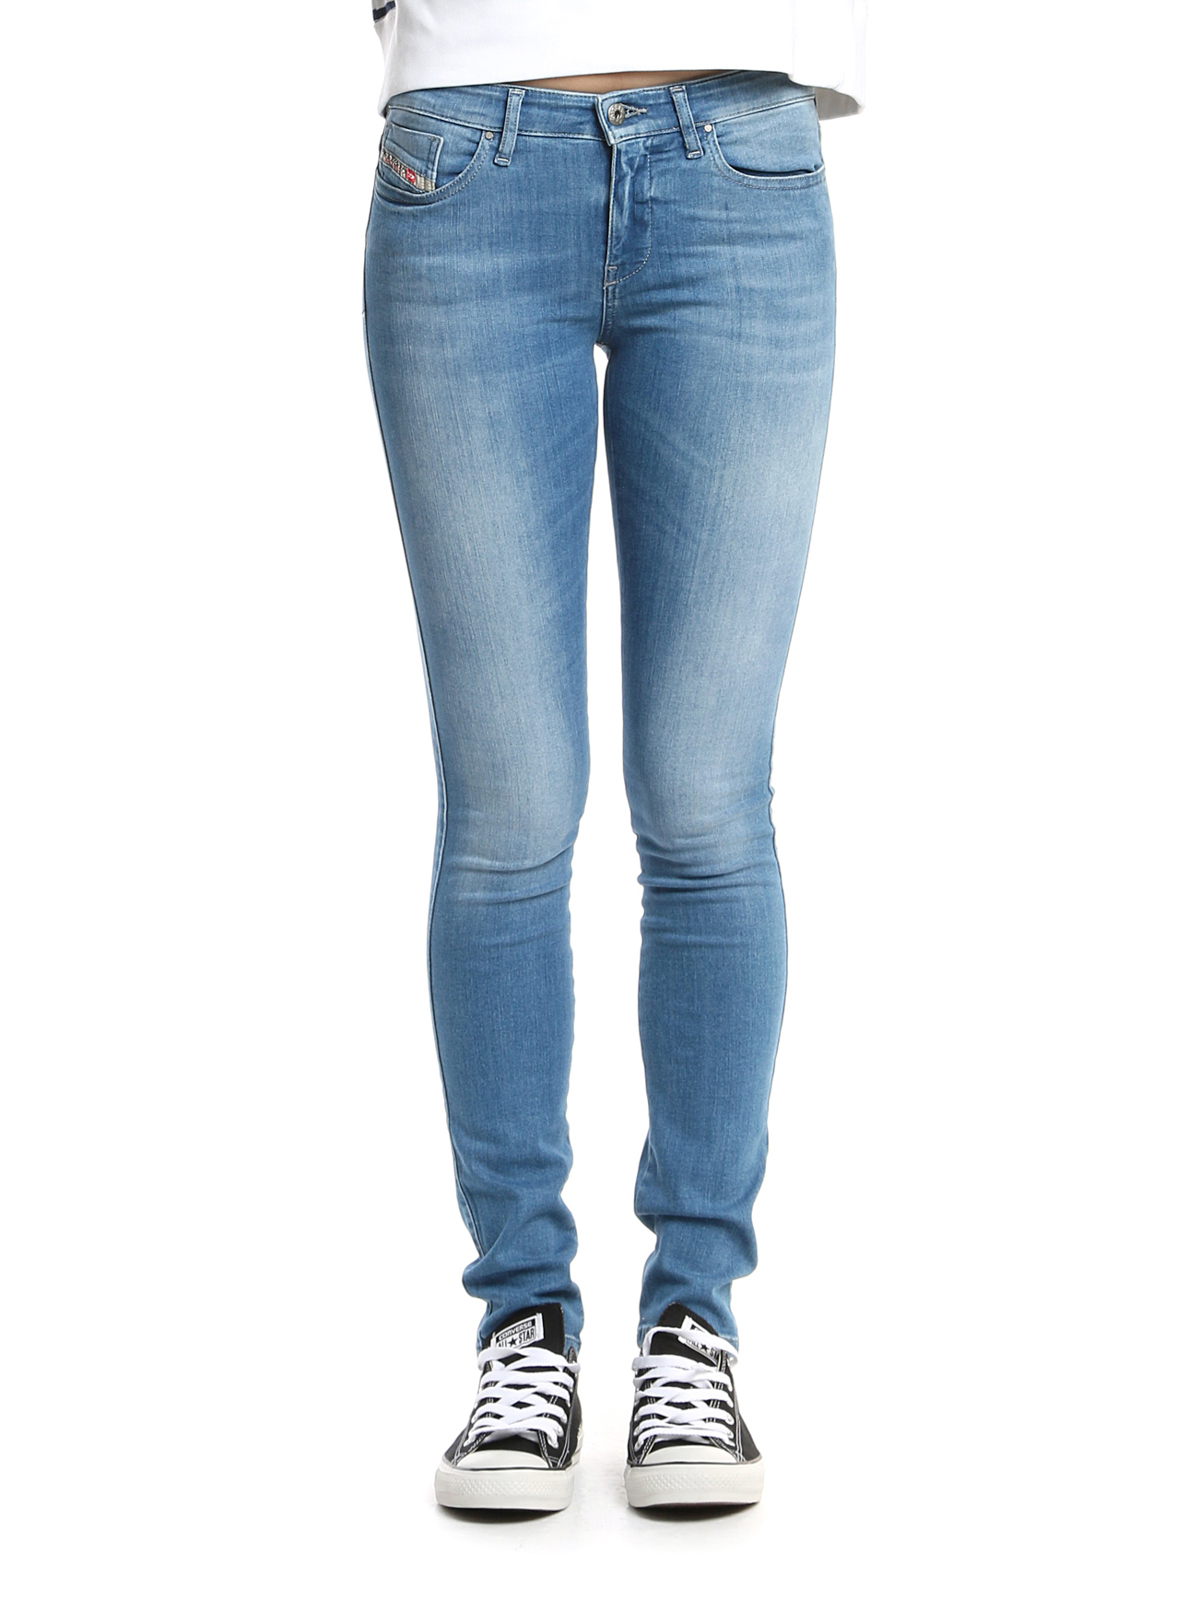 Skinny jeans Diesel - Skinzee jeans - S1420839P01 | Shop online at iKRIX